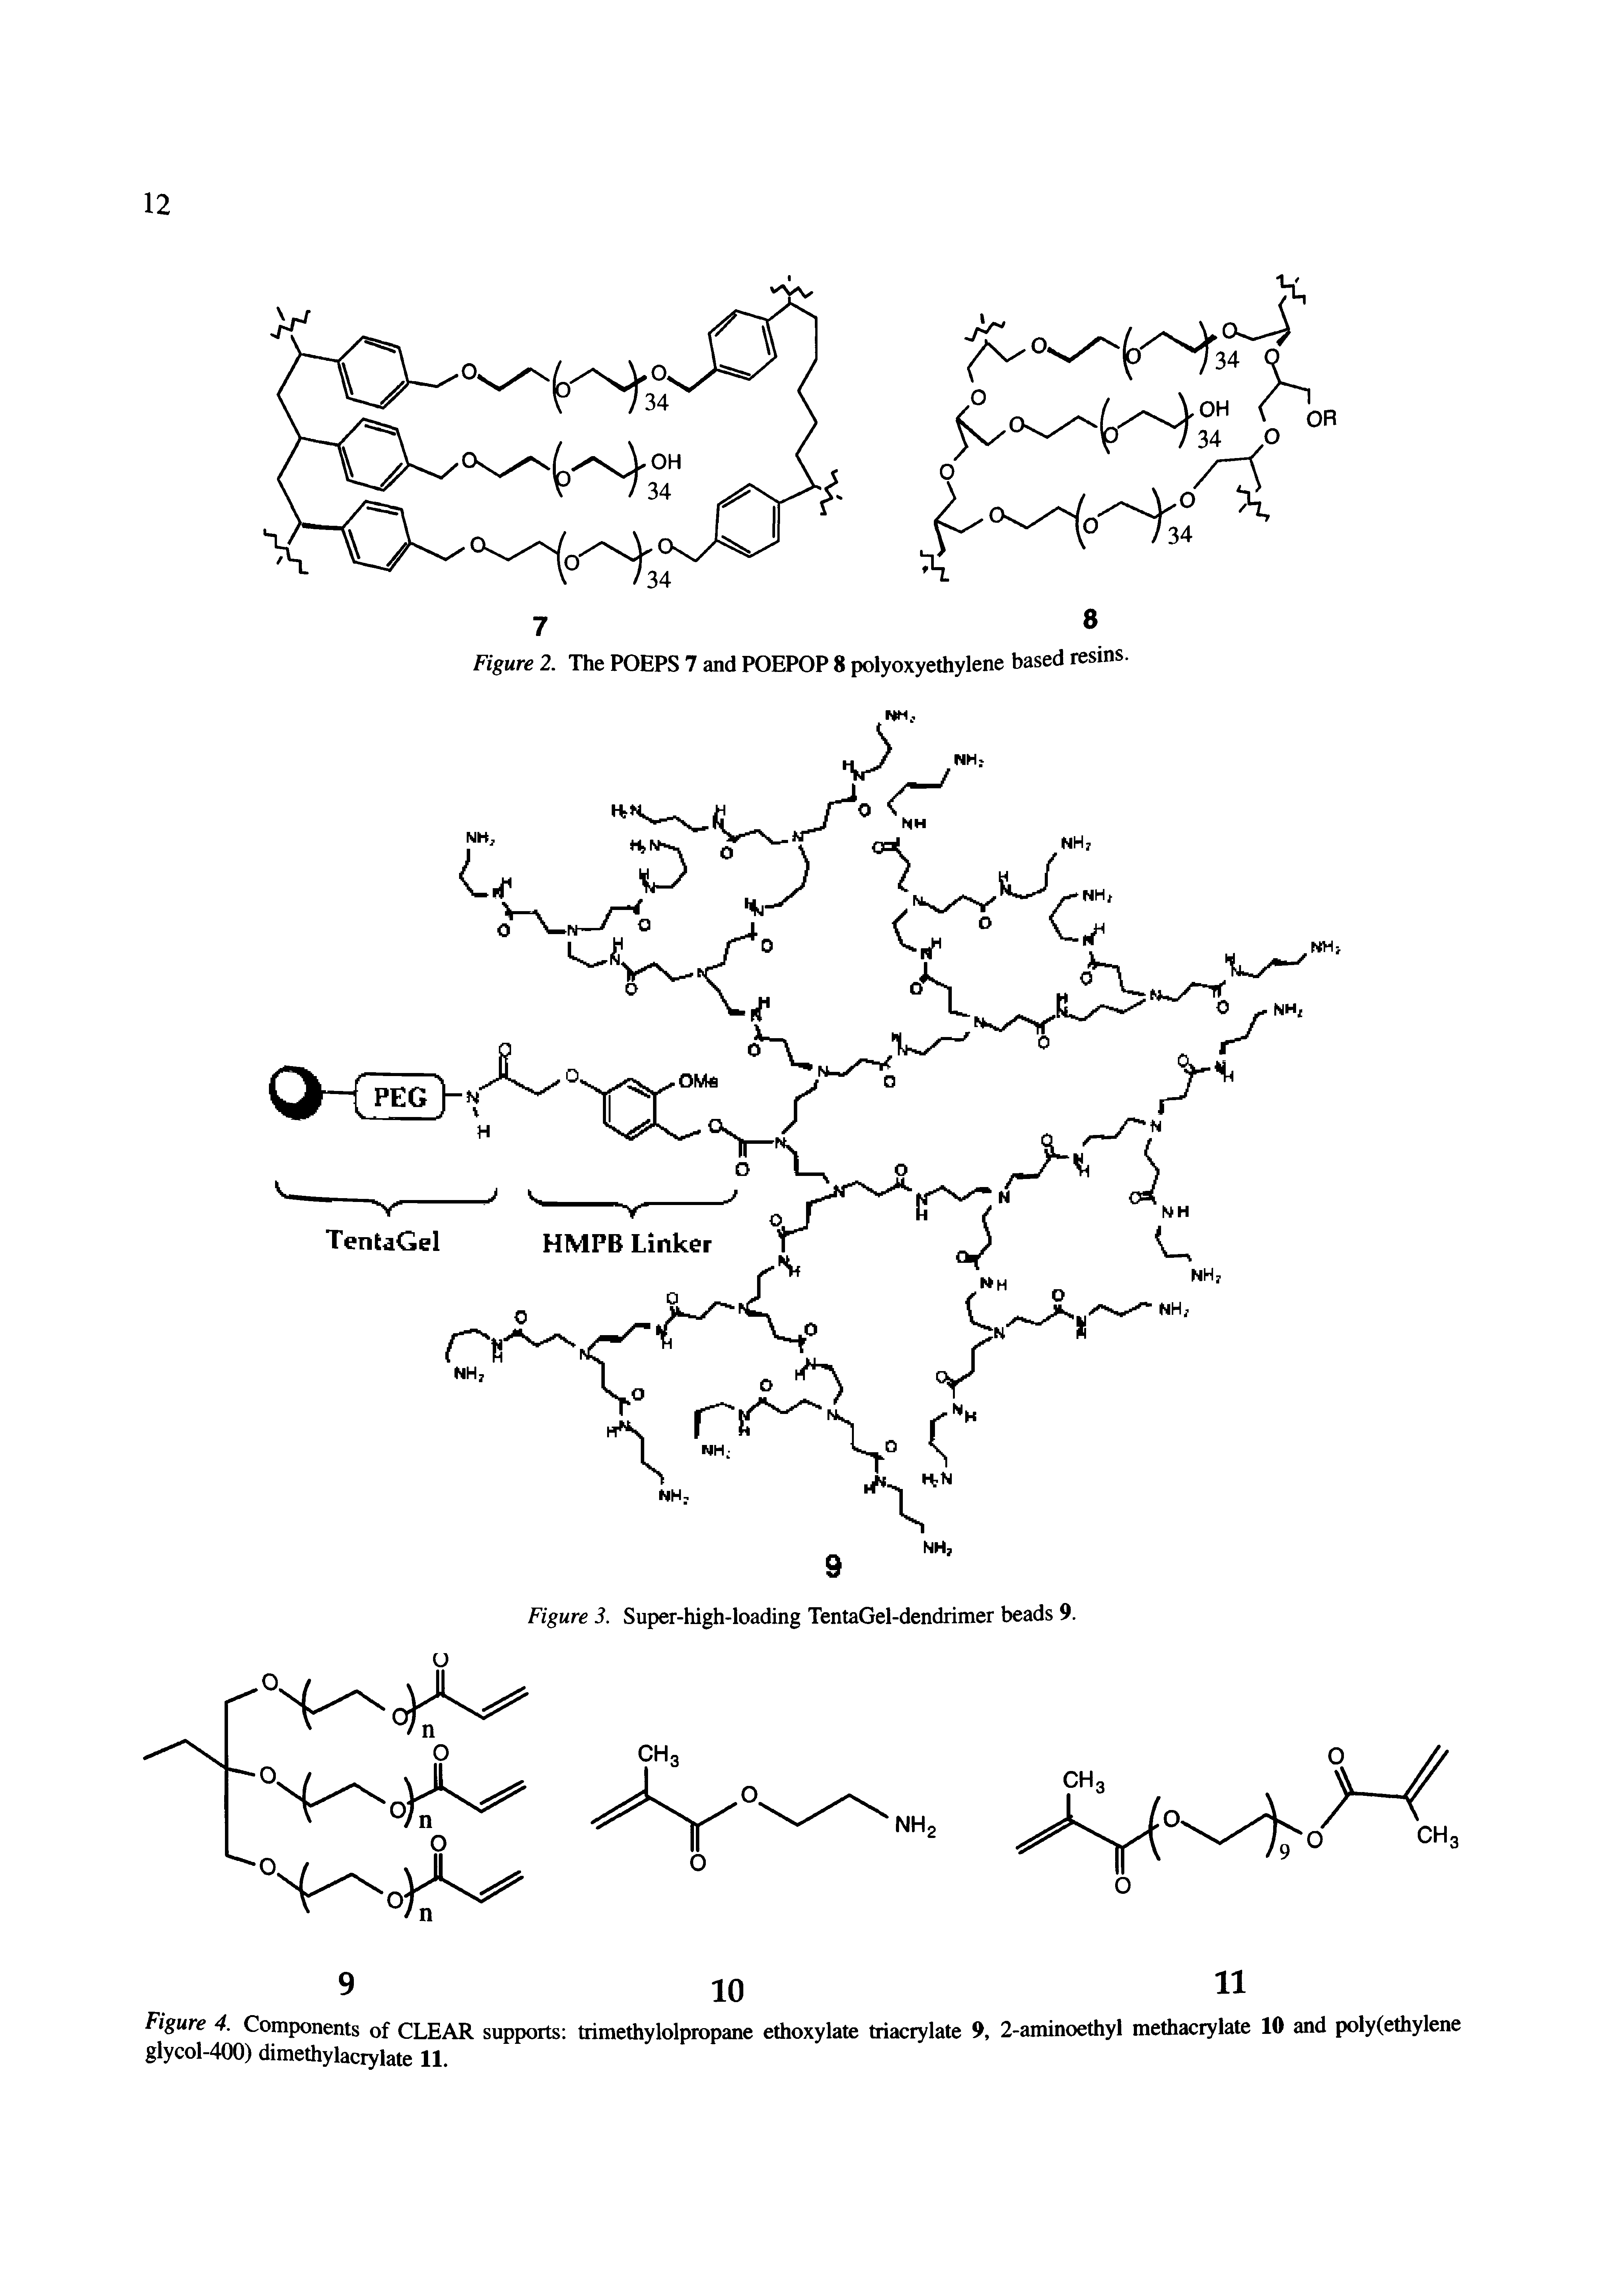 Figure 4. Components of CLEAR supports trimethylolpropane ethoxylate triacrylate 9, 2-aminoethyl methacrylate 10 and poly(ethylene glycol-400) dimethylacrylate 11.